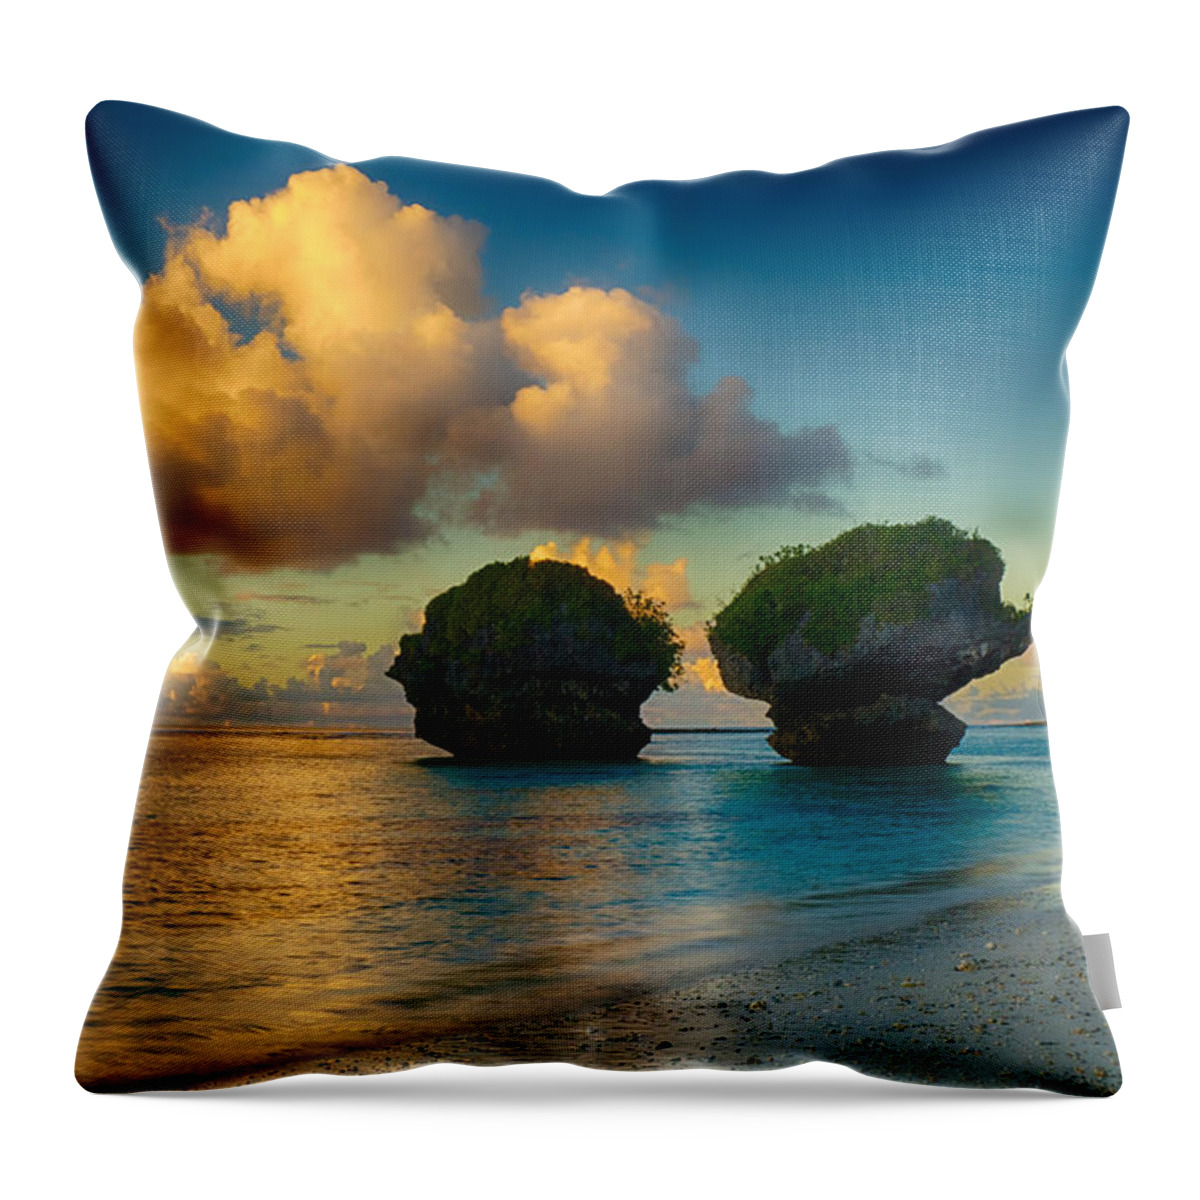 Pristine Throw Pillow featuring the photograph Island Life by Amanda Jones